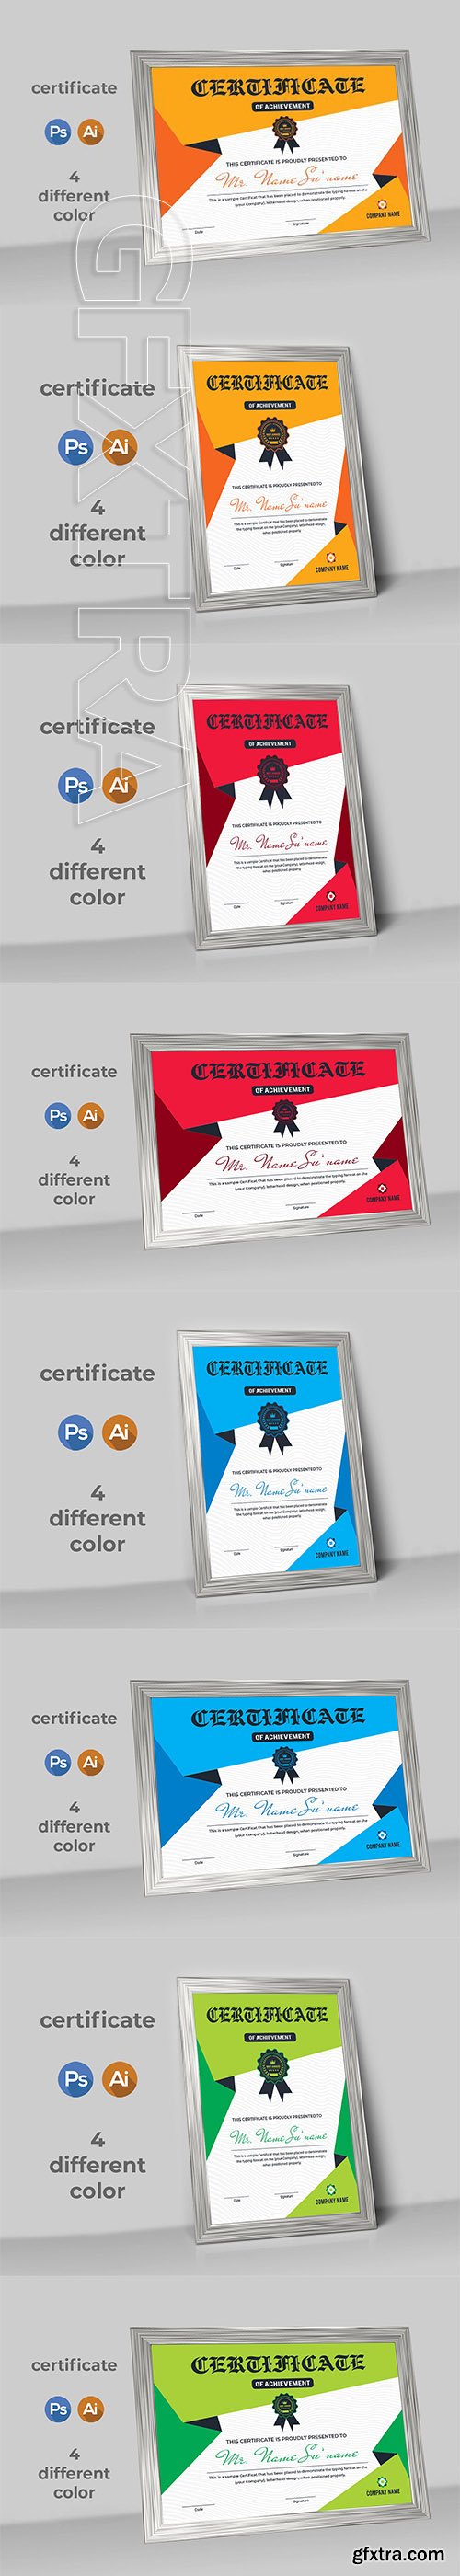 CreativeMarket - Certificate Print Ready Template 2708485